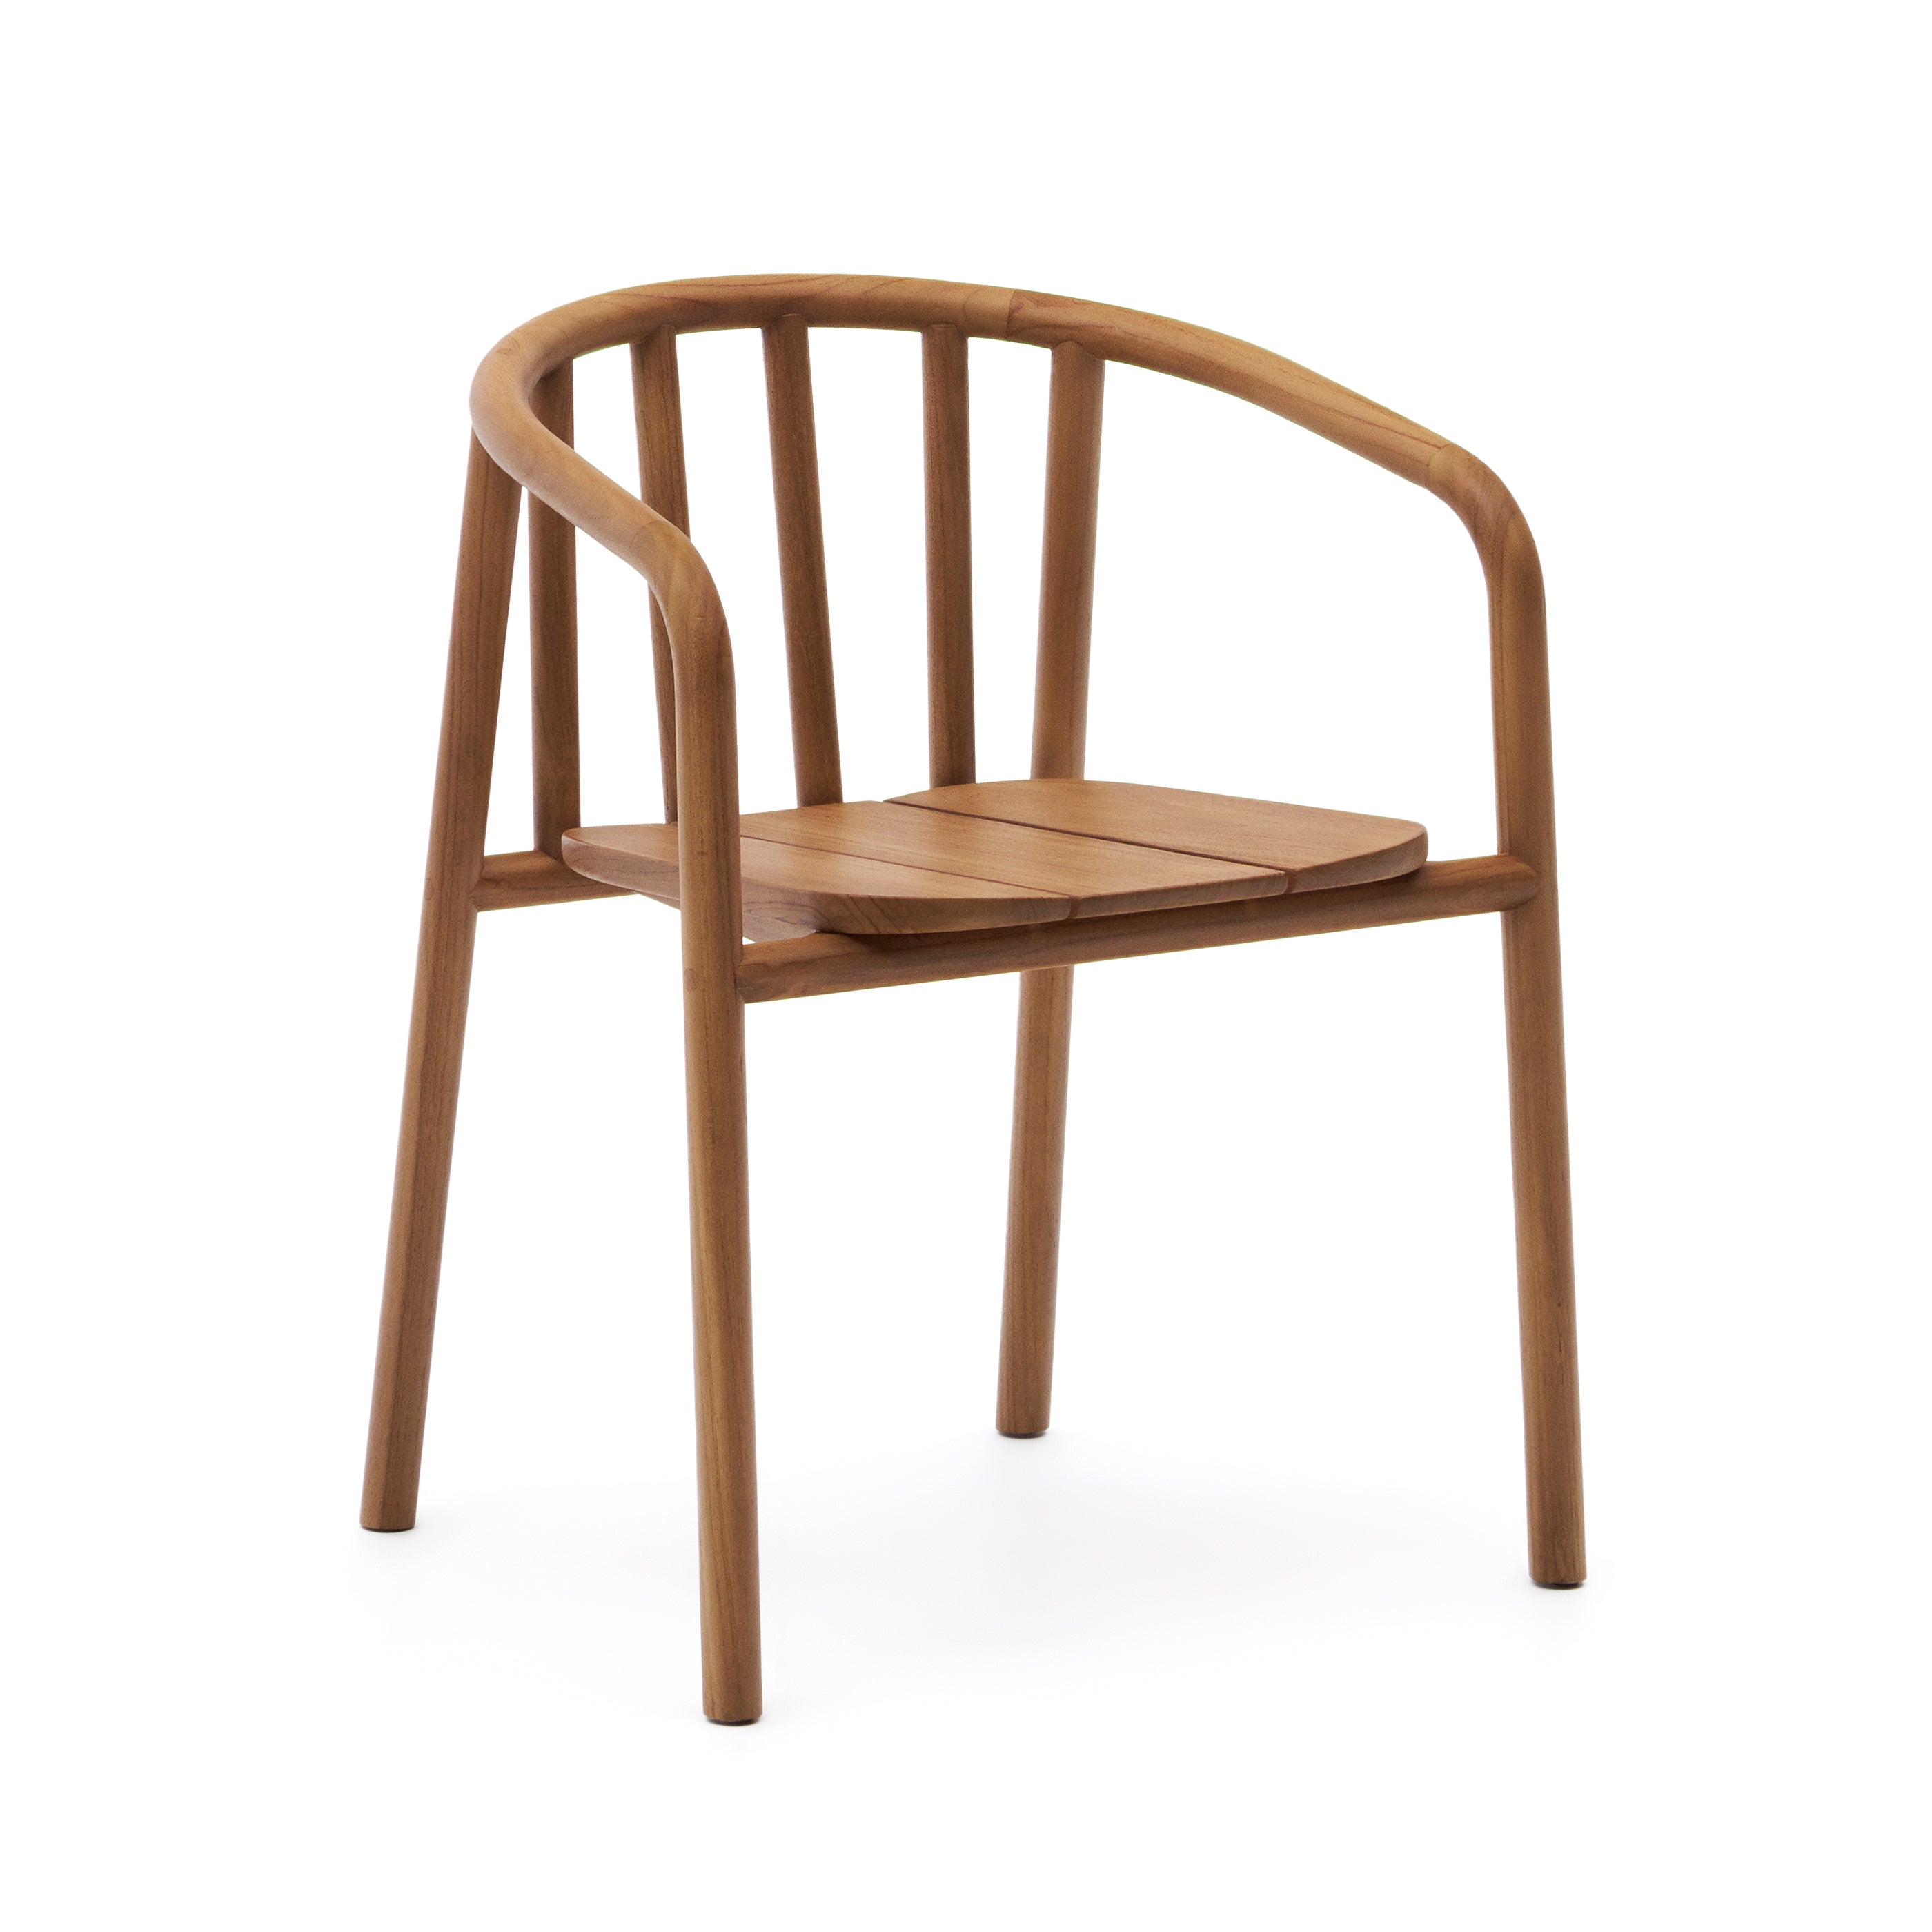 Turqueta folding chair, made of 100% FSC certified solid teak wood